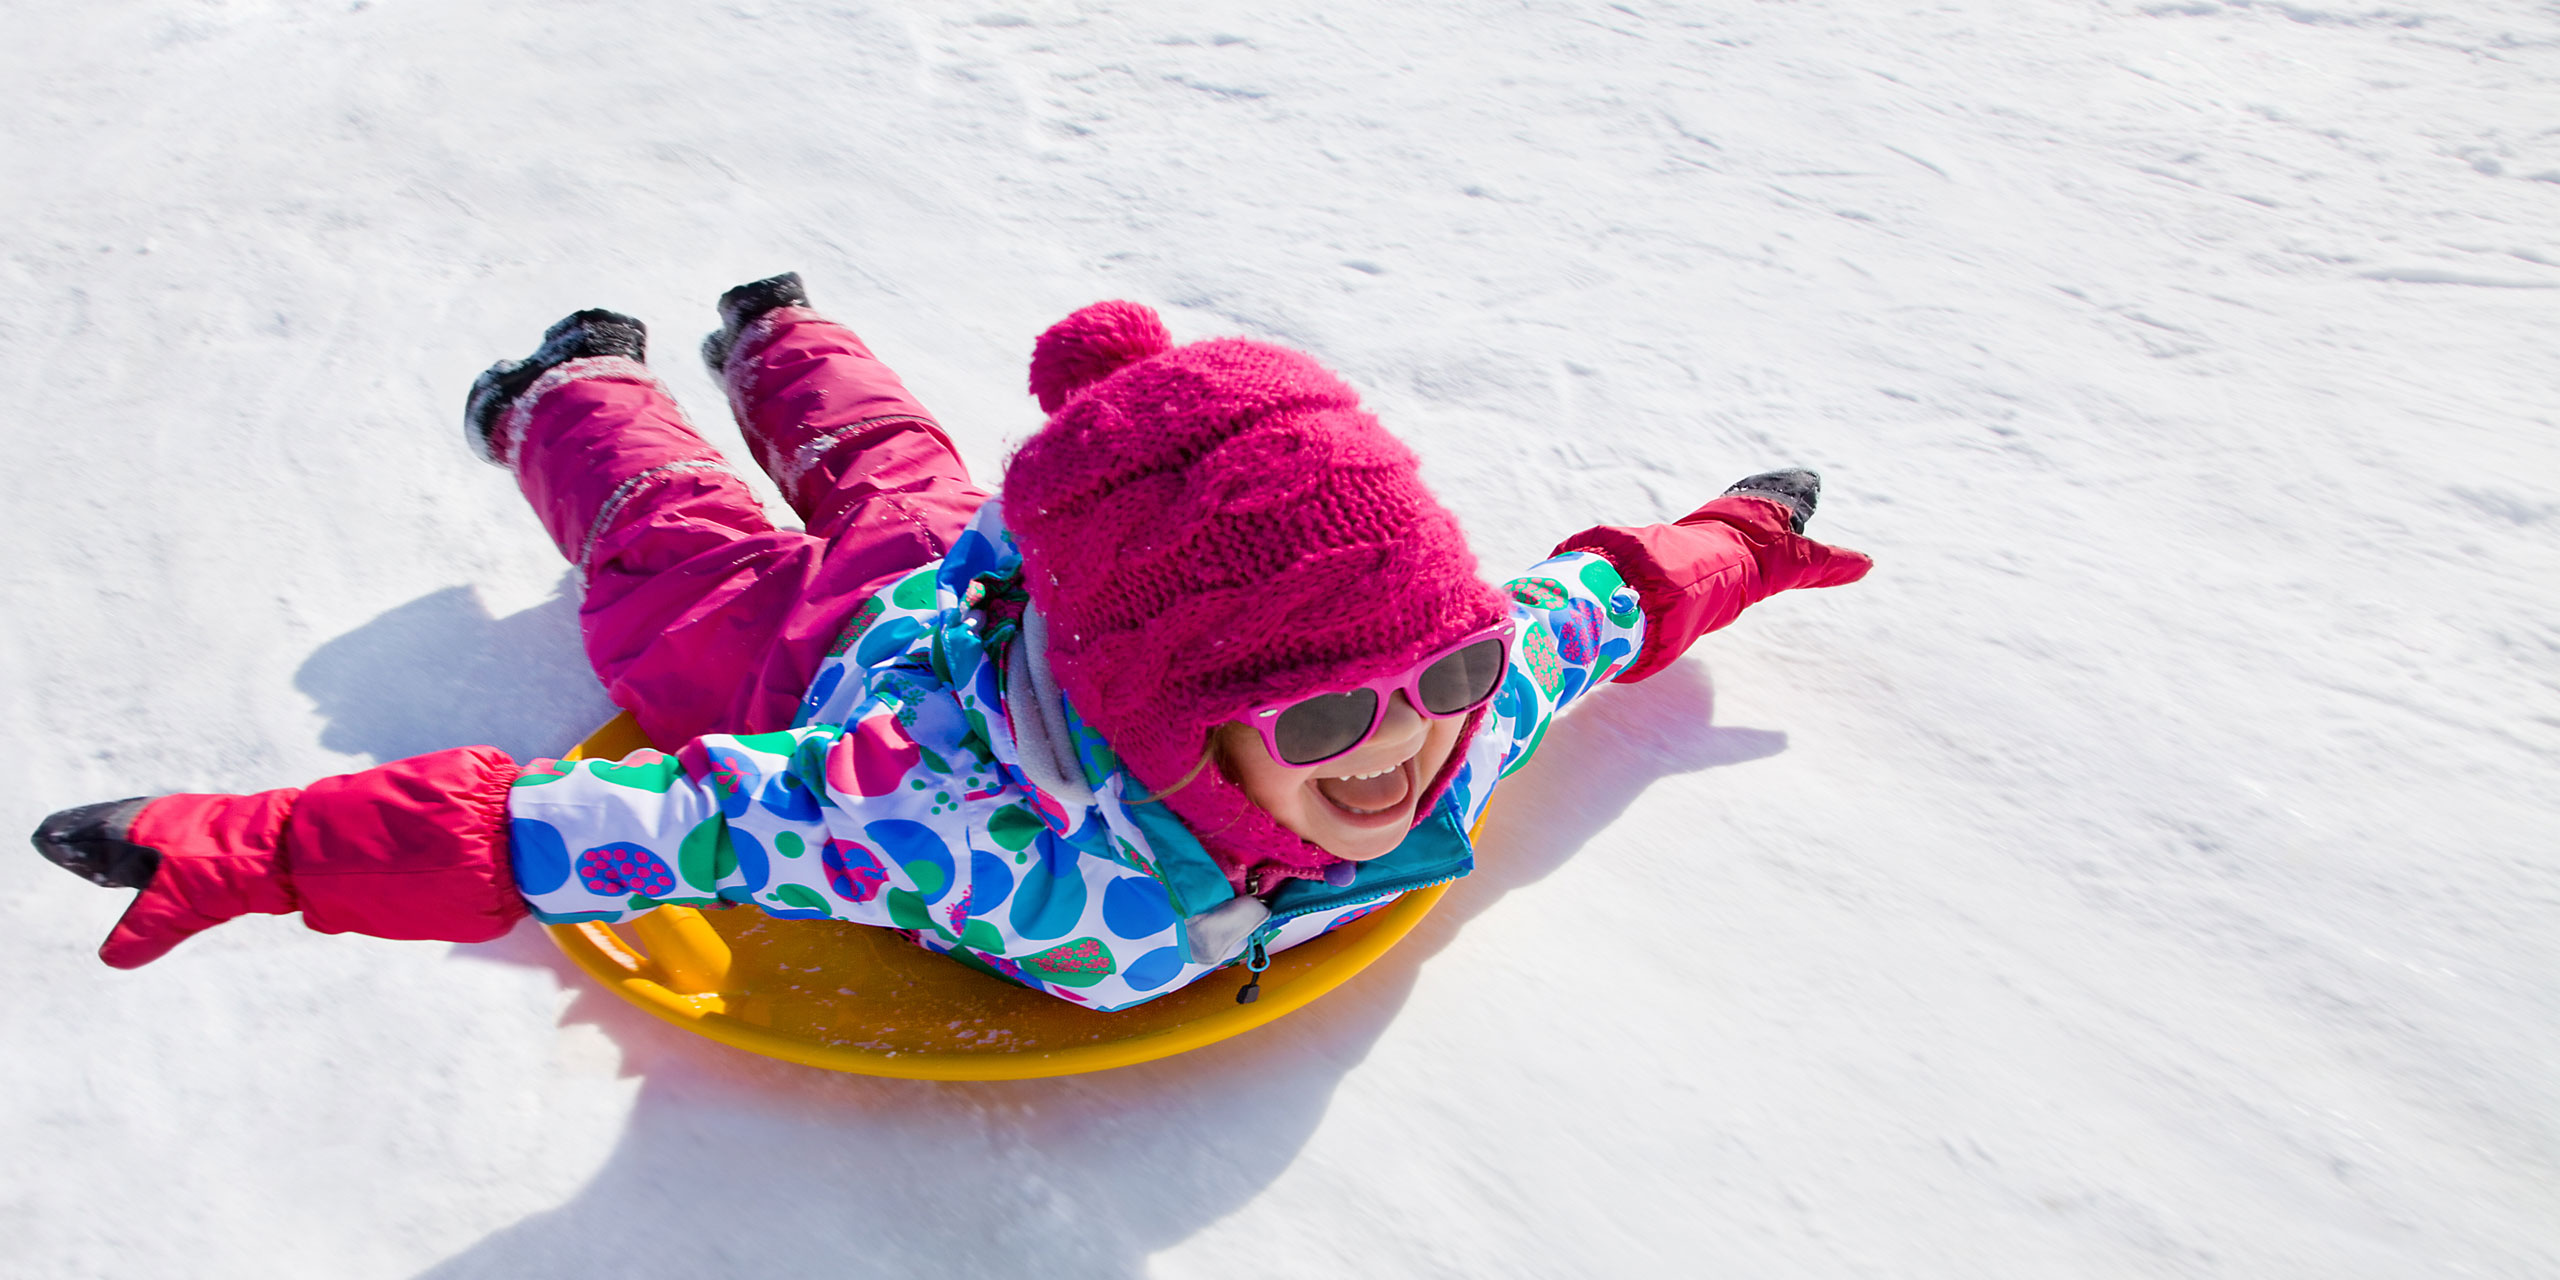 Girl Sledding in winter; Courtesy of YanLev/Shutterstock.com